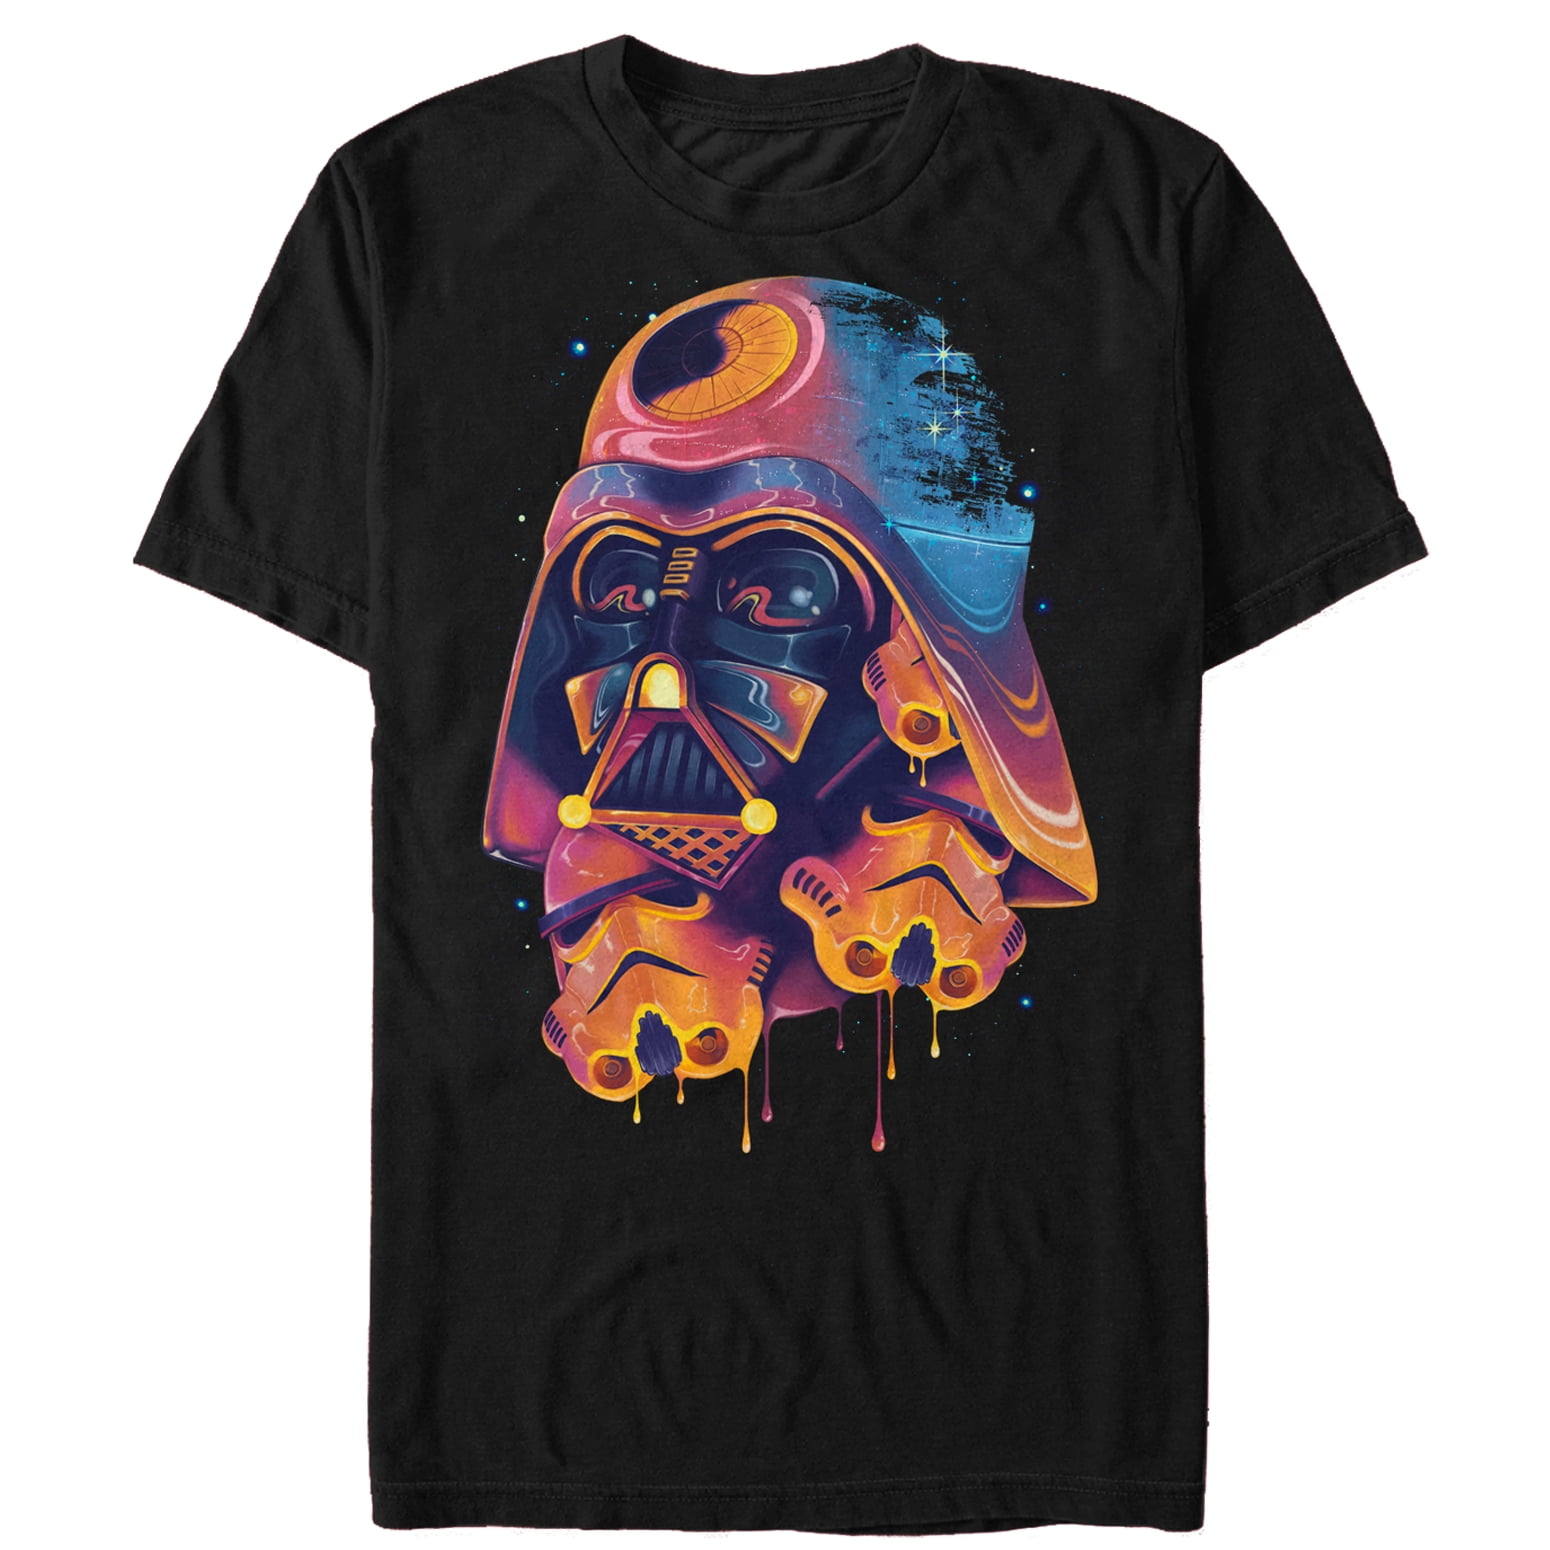 STAR WARS Darth Vader Dark Side Crunch Cereal Funny Humor Pun Adult Tee Graphic T-Shirt for Men Tshirt